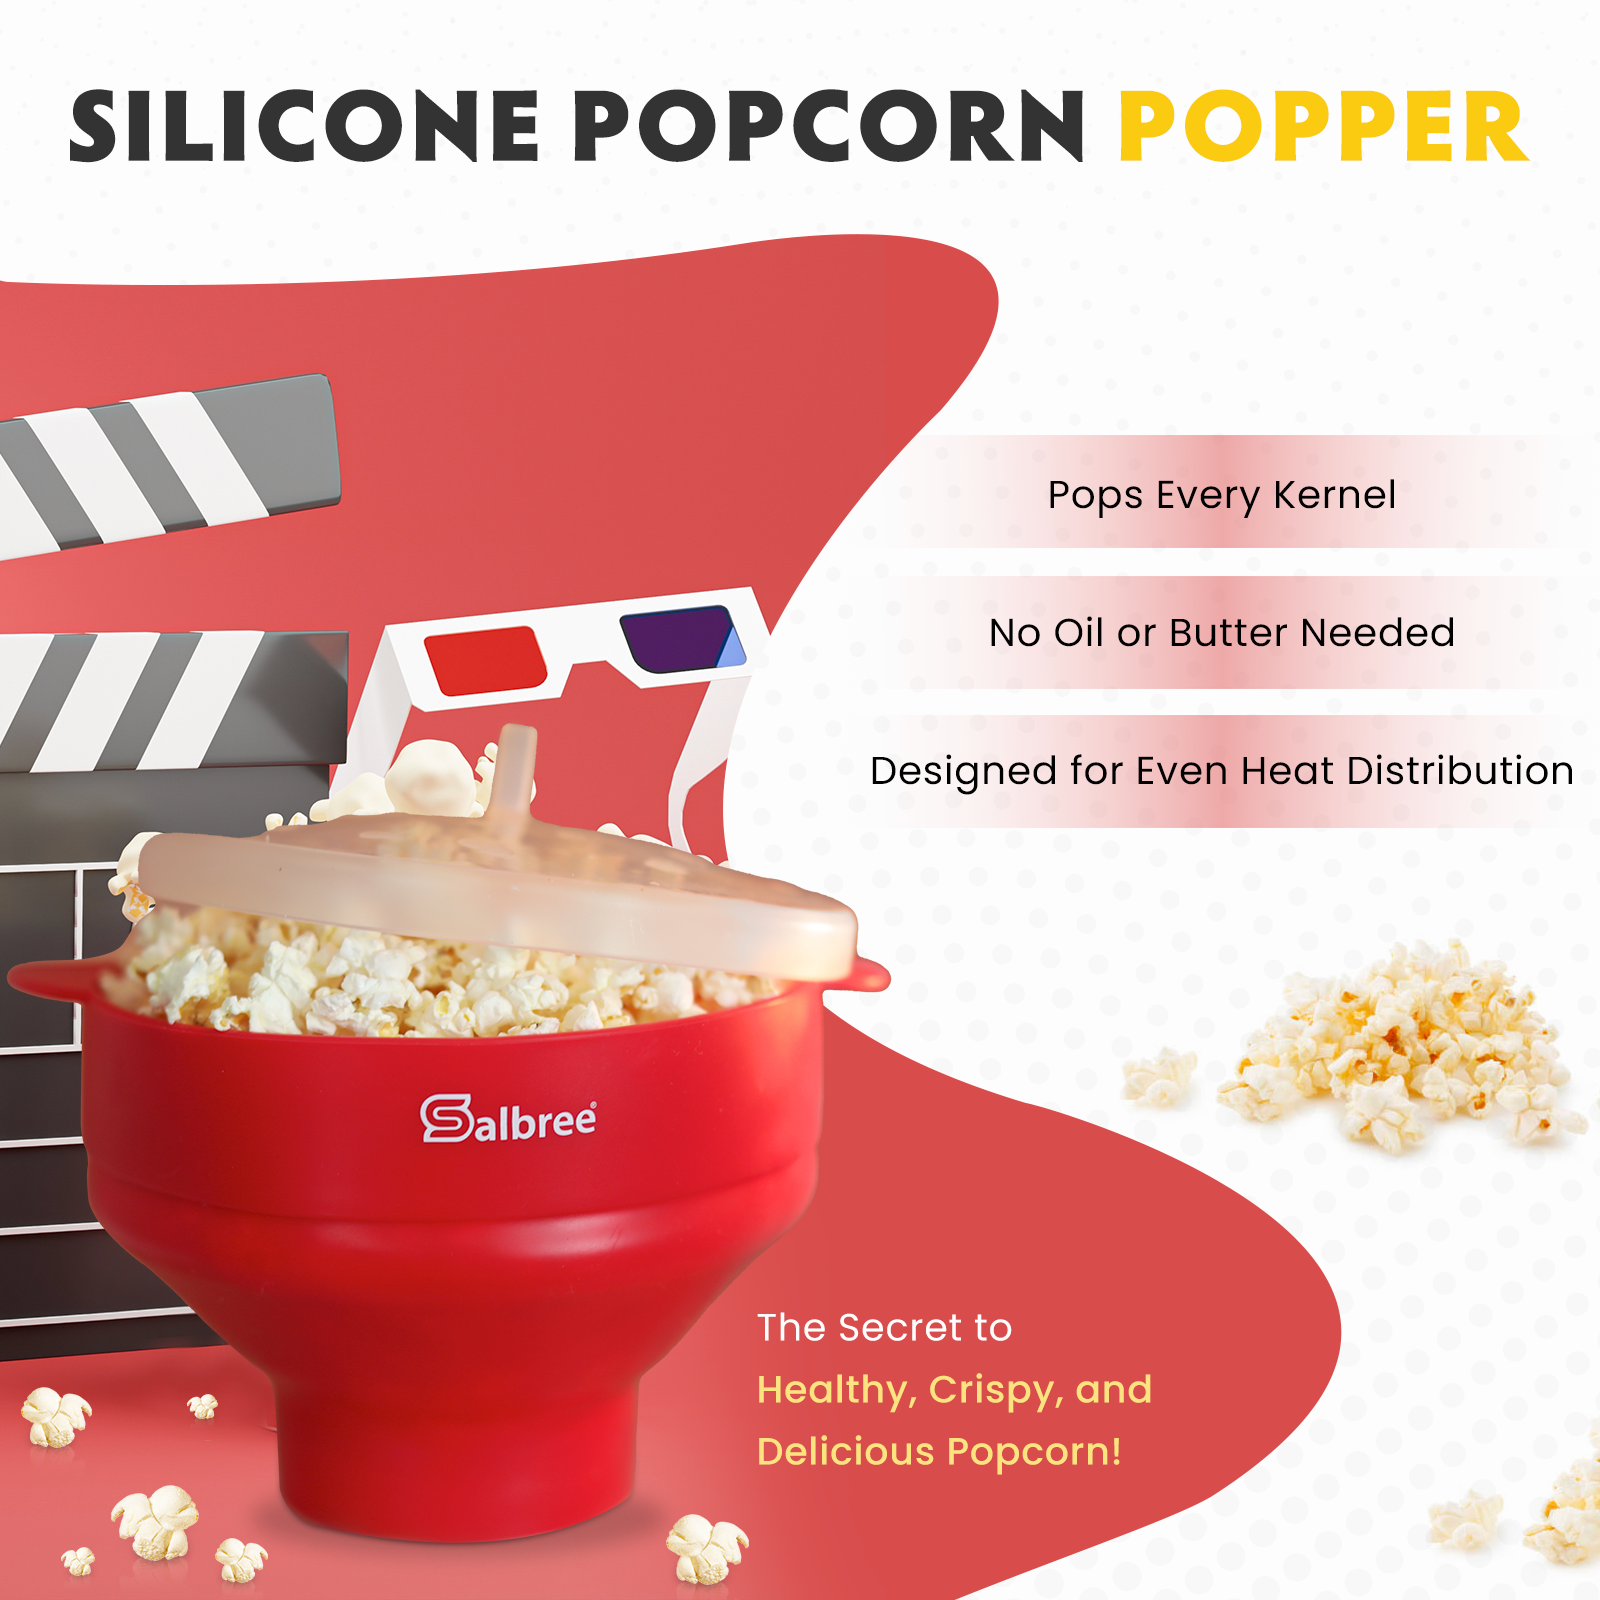 Salbree Microwave Popcorn Popper - Gray salbree.com